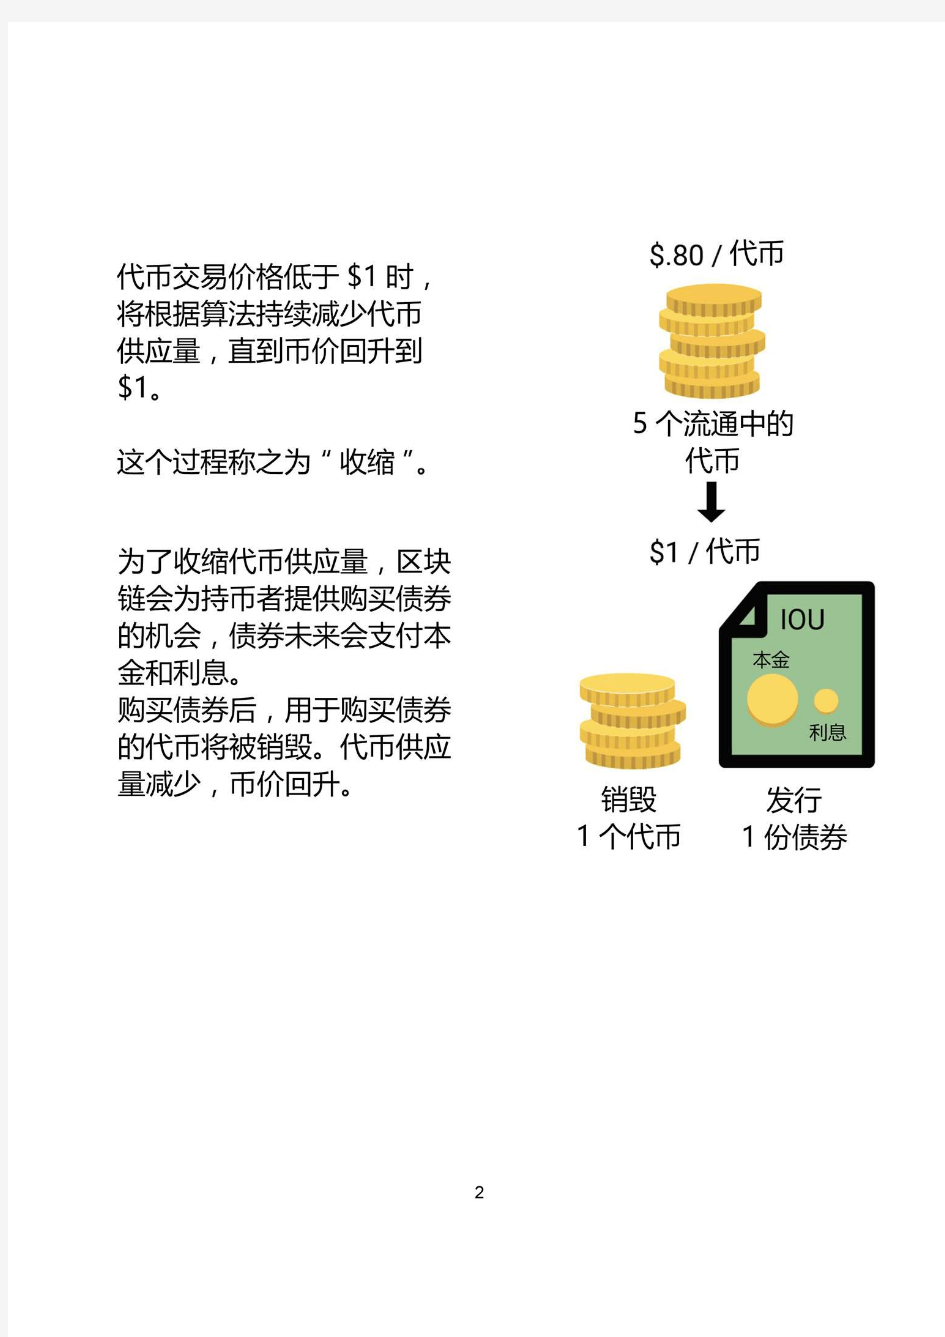 basecoin(金融)中文简易白皮书